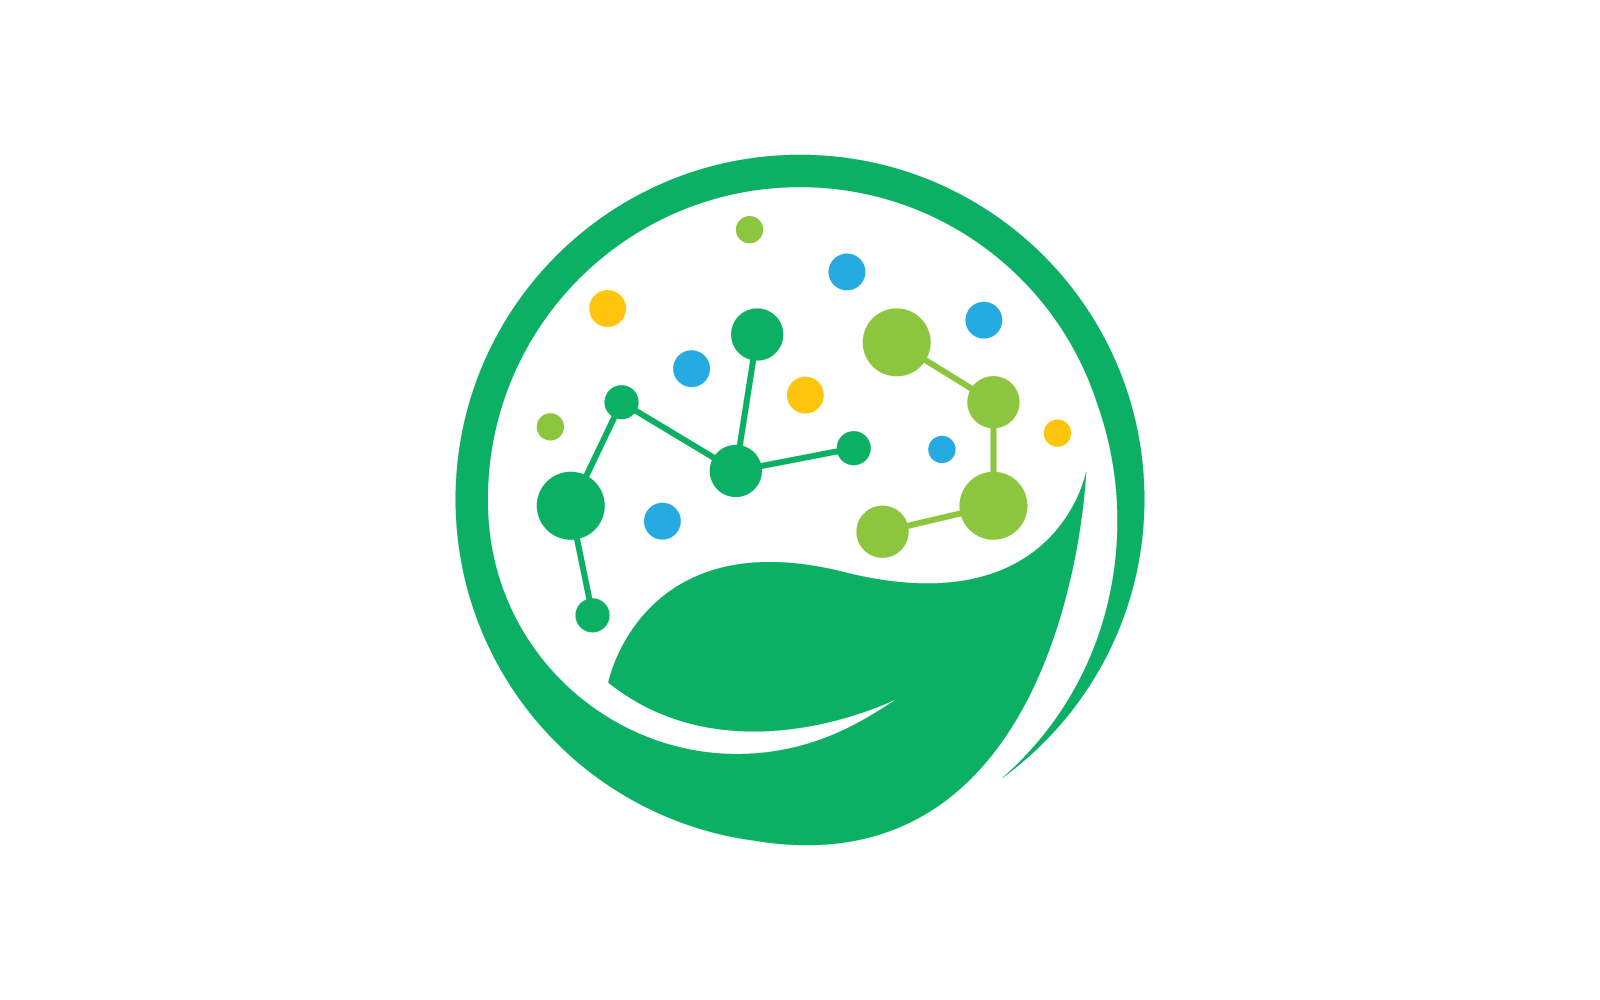 Bio tech leaf and molecule logo design illustration vector